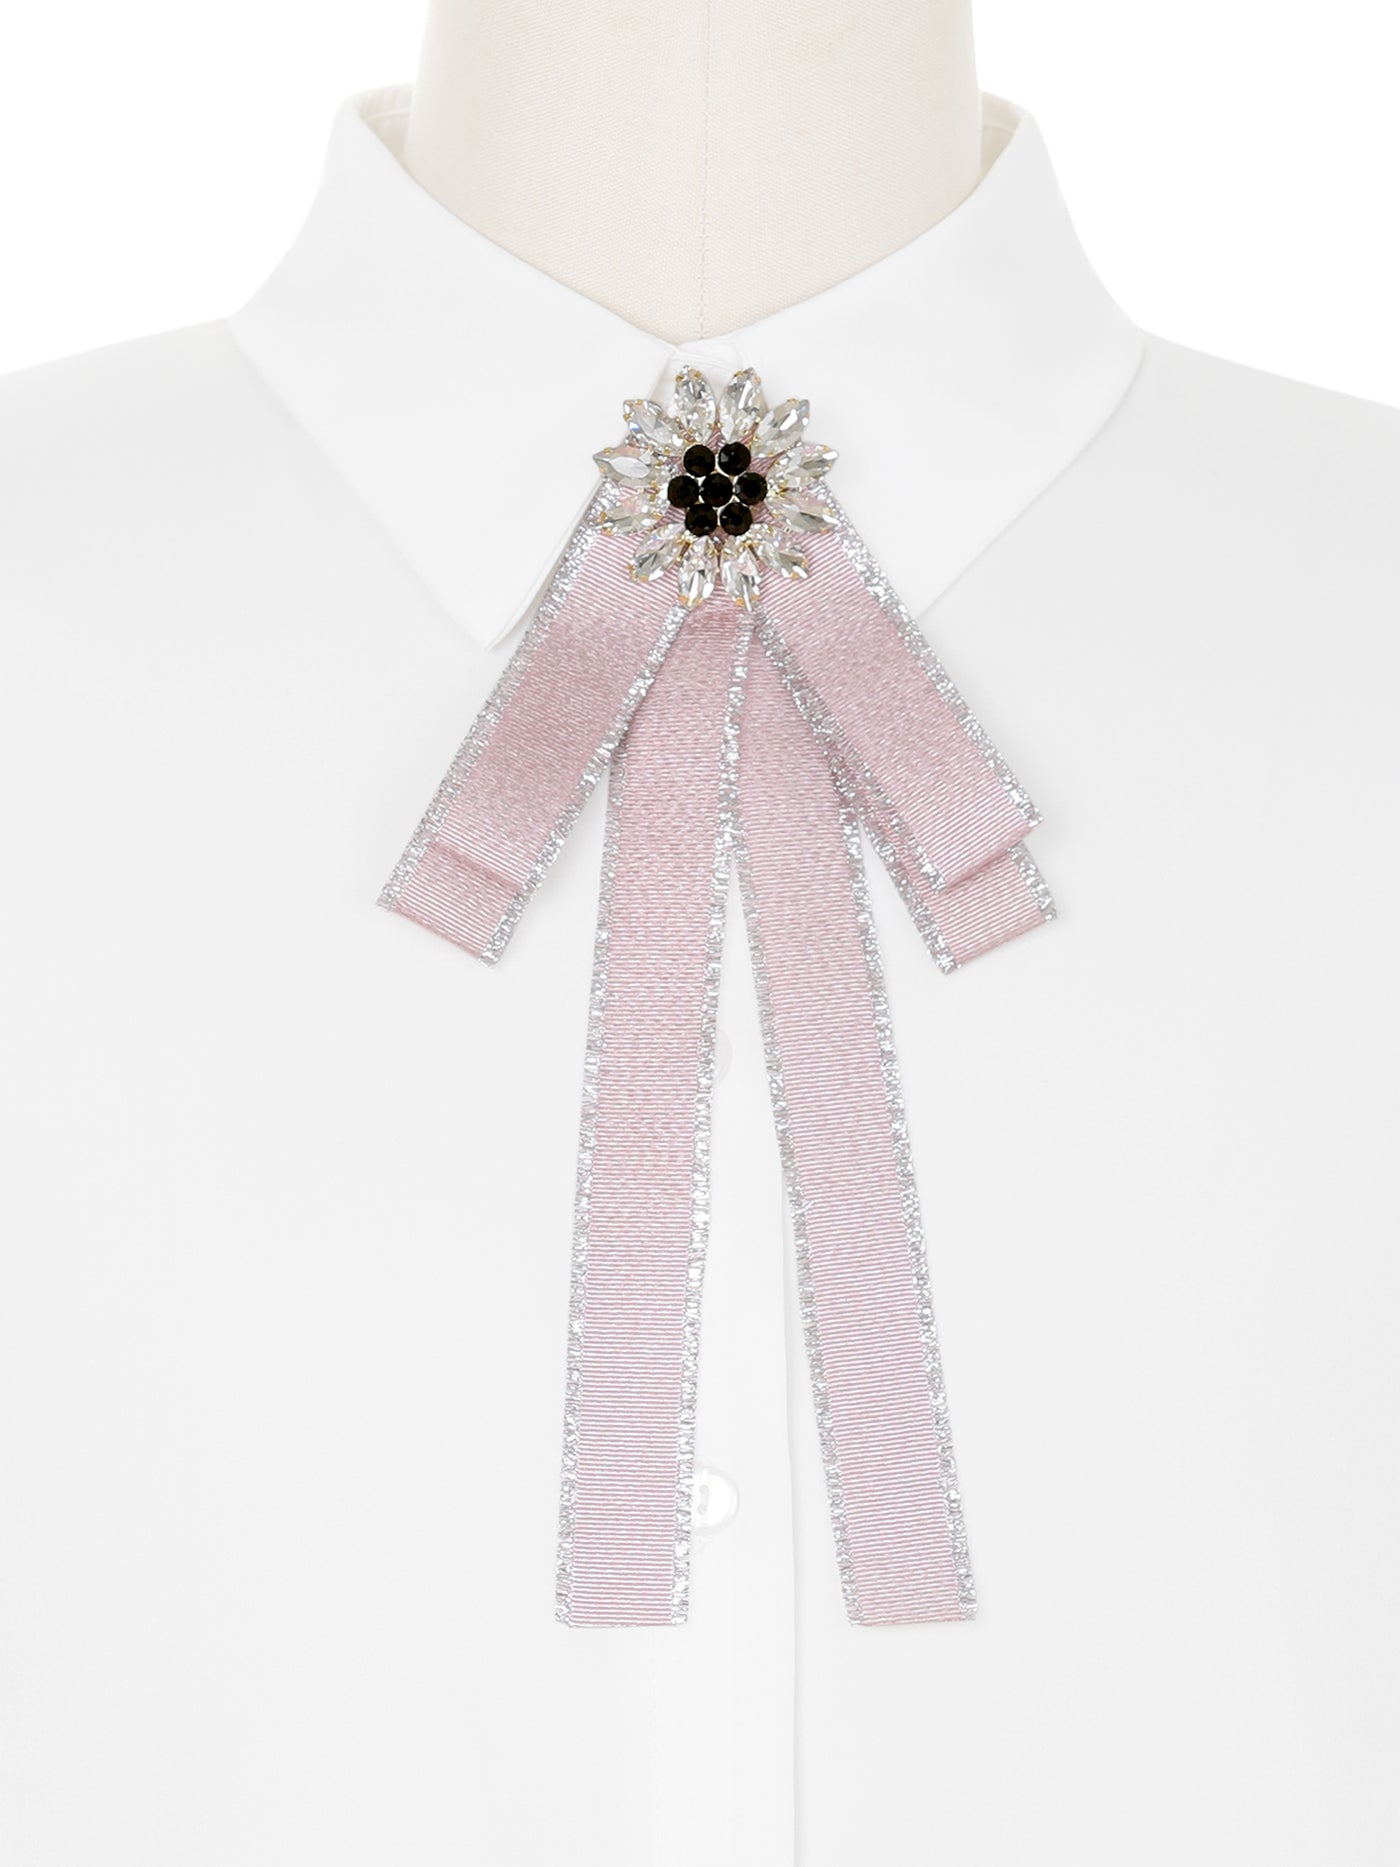 Bublédon Women's Pre-Tied Neck Ribbon Elegant Bowknot Pin Bow Tie Brooches